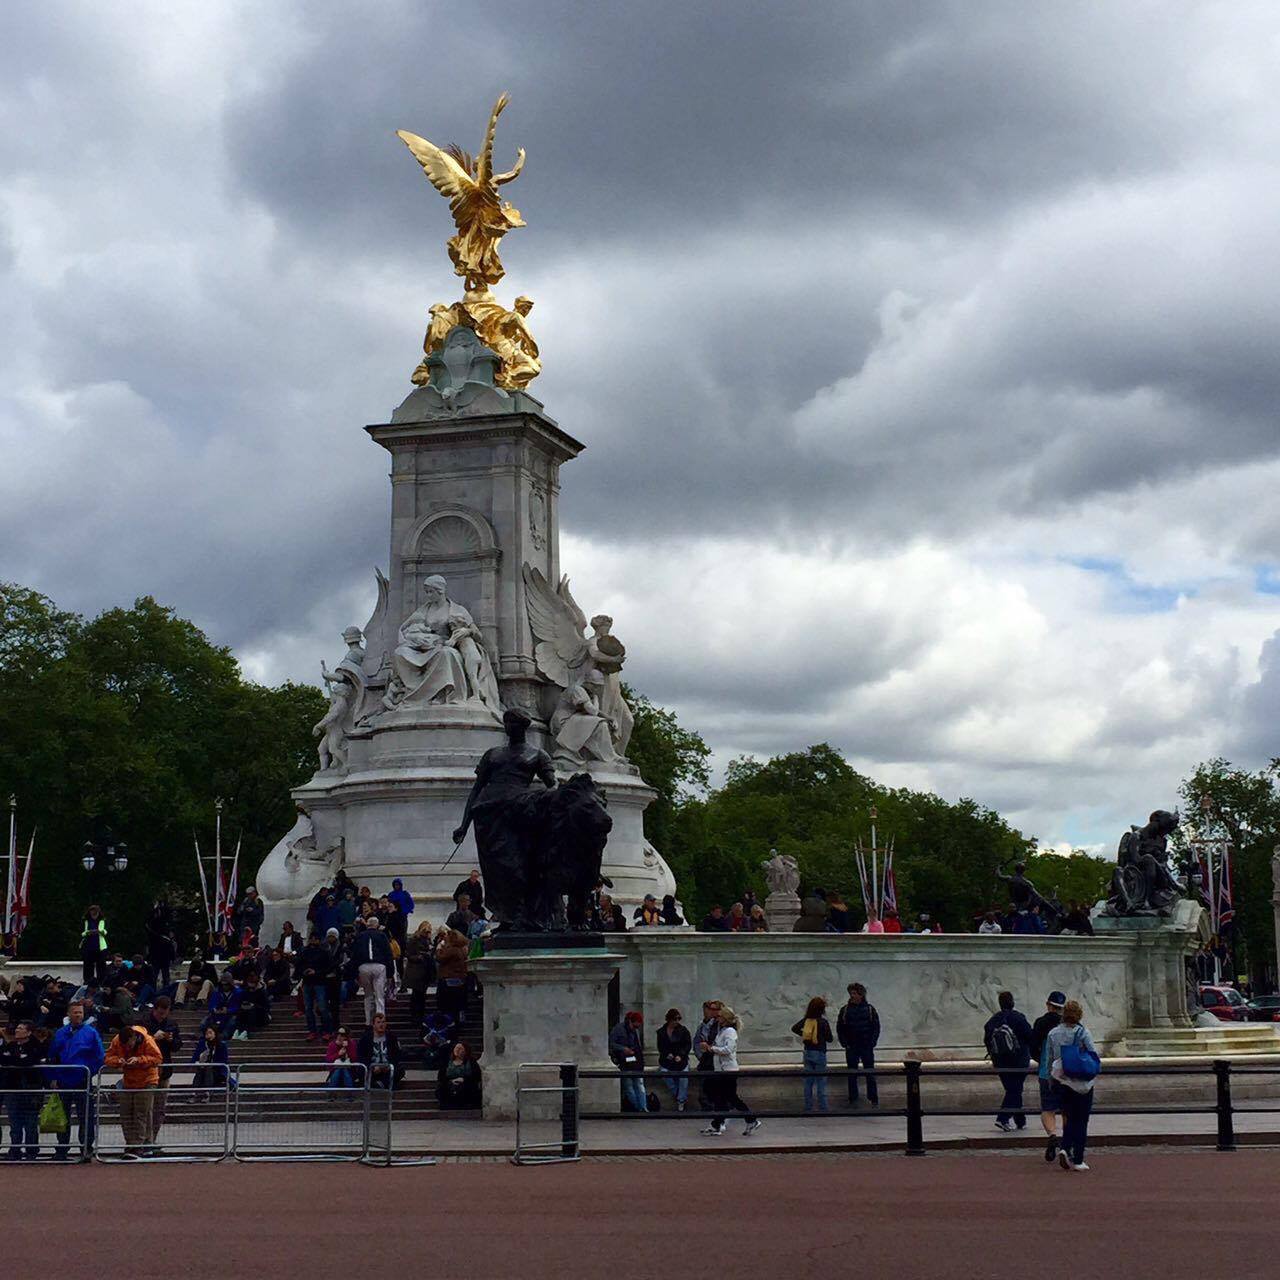 Across Buckingham Palace: the Victoria Memorial 